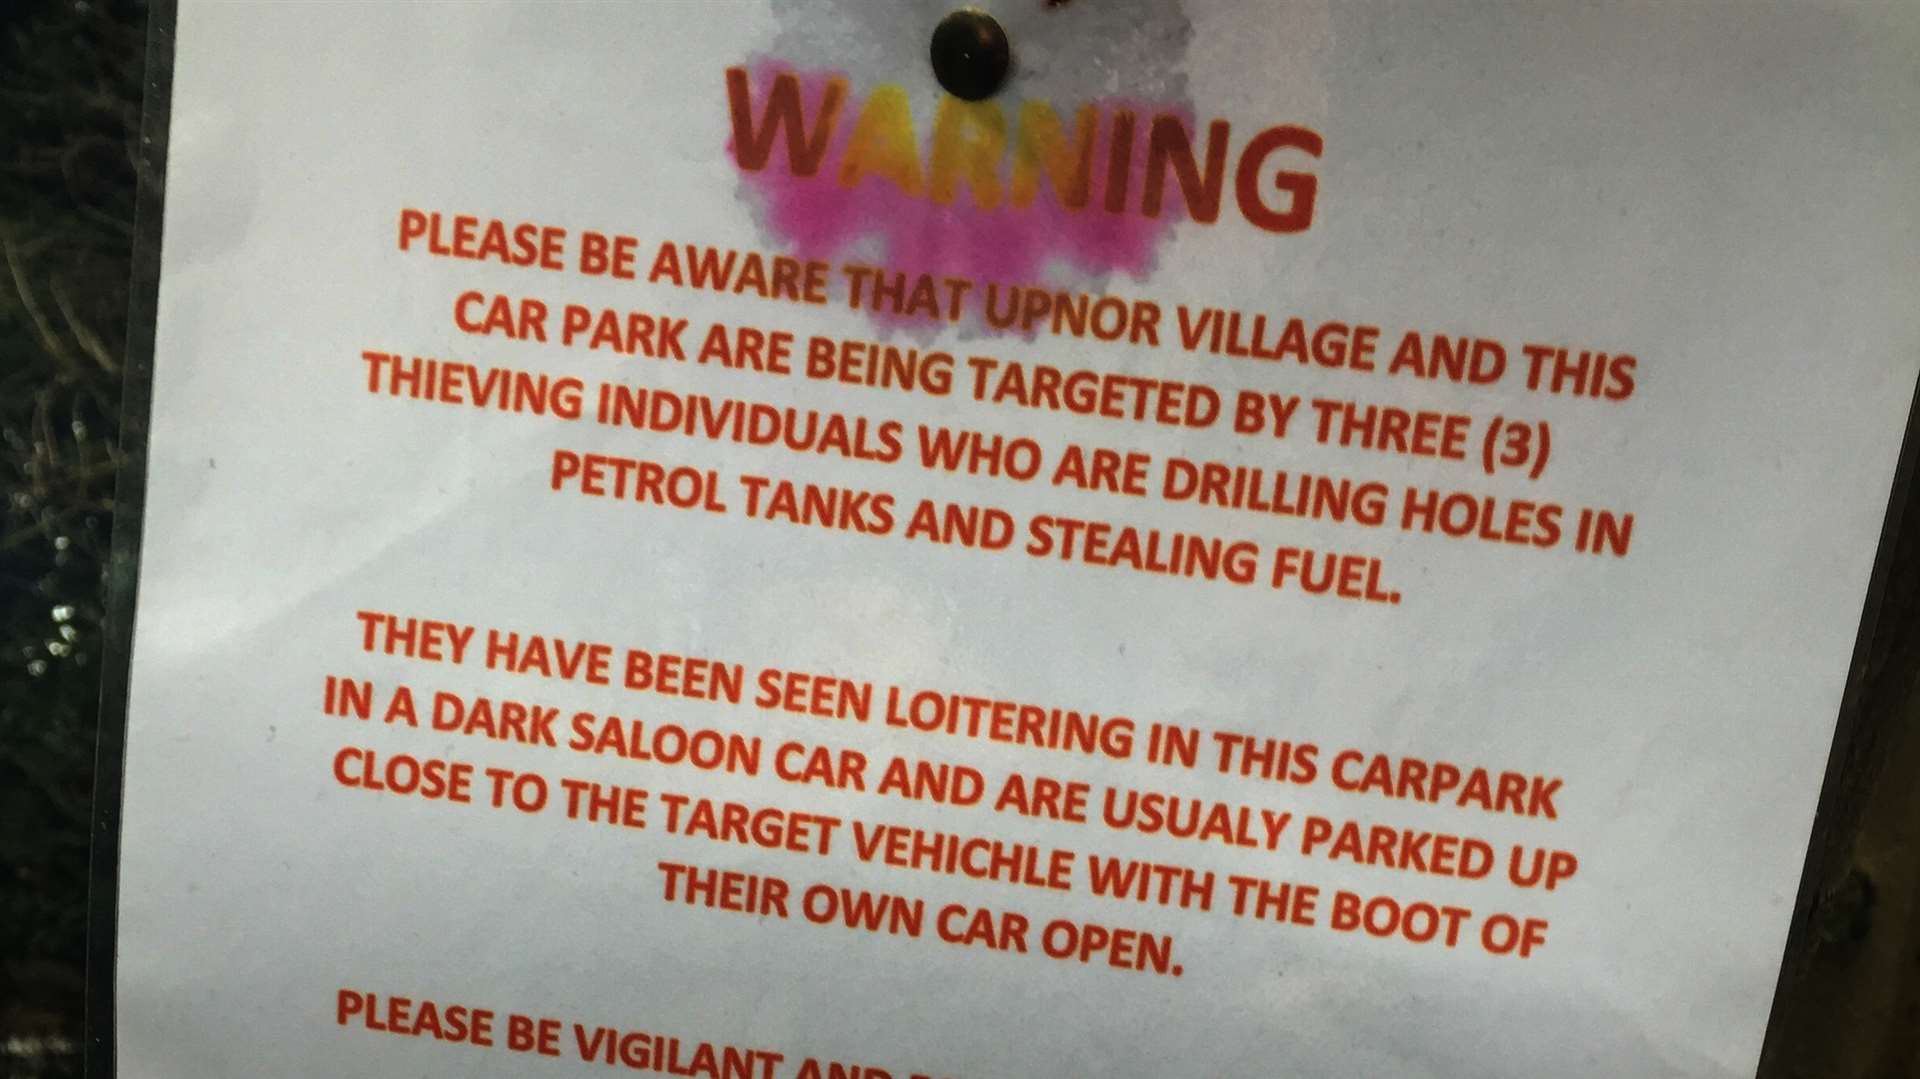 Warning notice at car park in Upnor